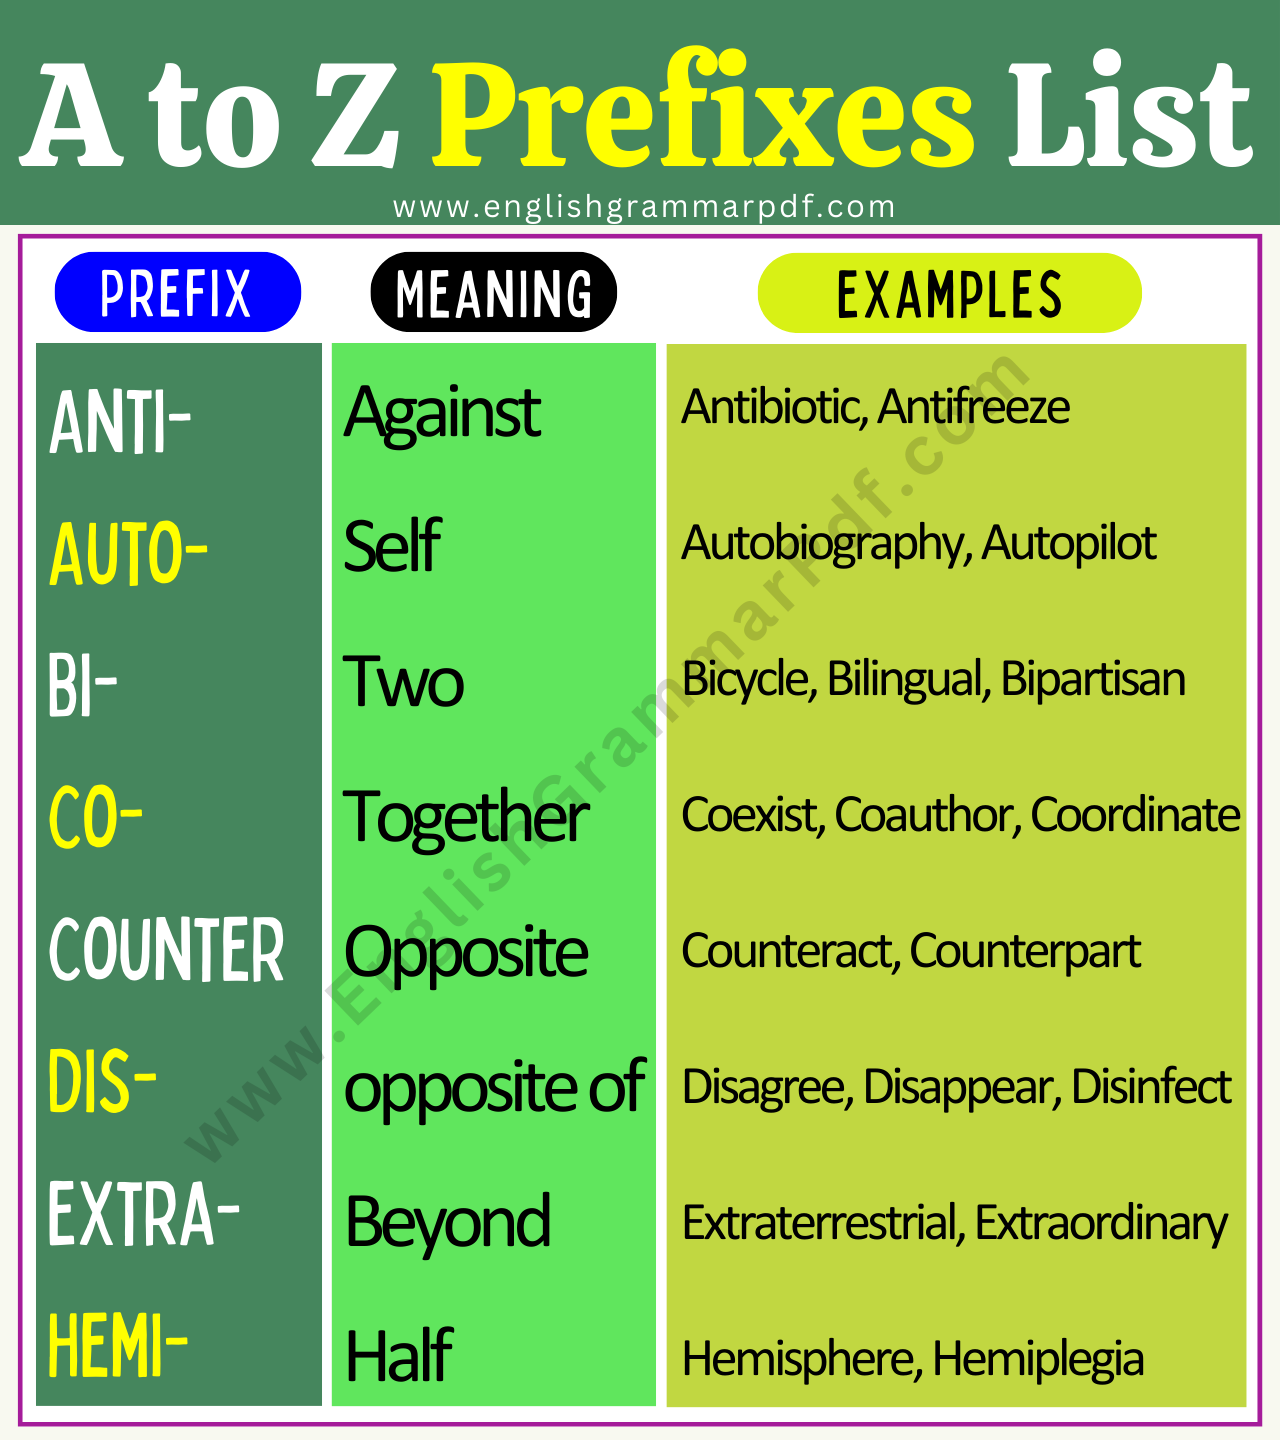 A to Z Prefixes List